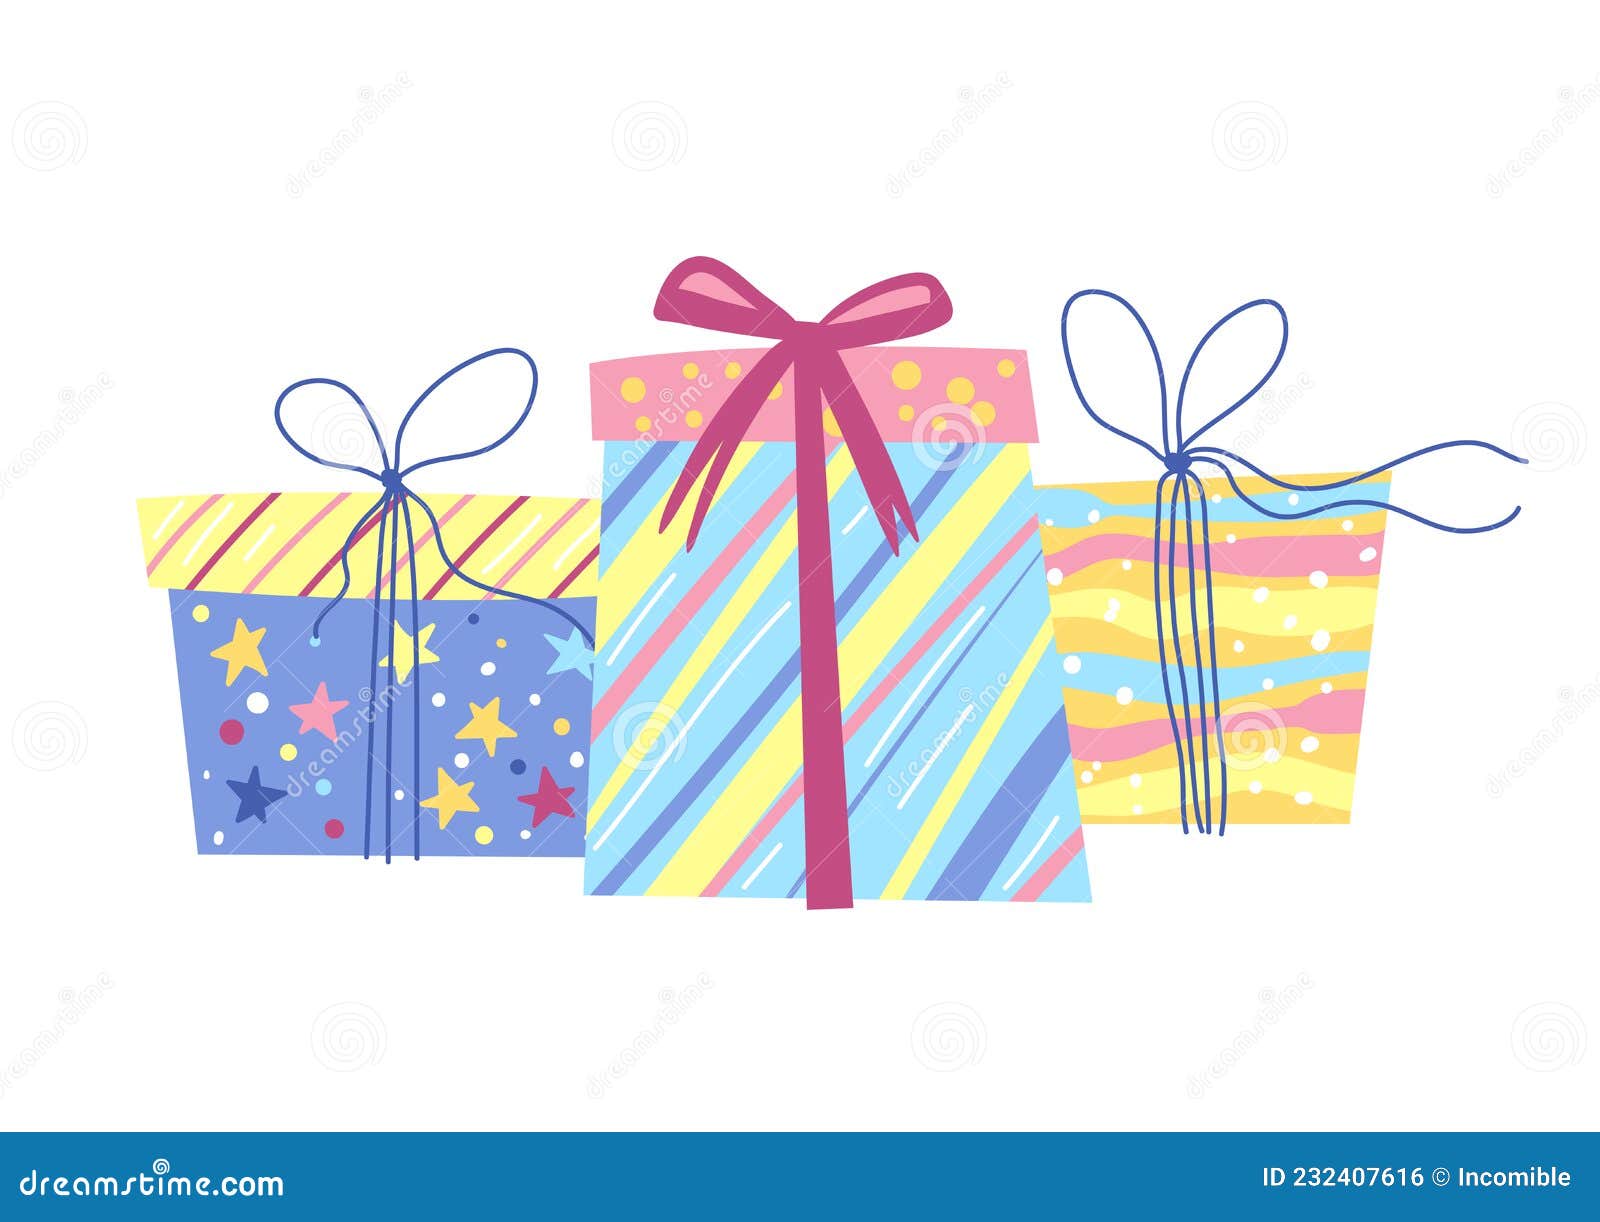 Illustration of Happy Birthday Gift Boxes. Celebration or Holiday Item ...